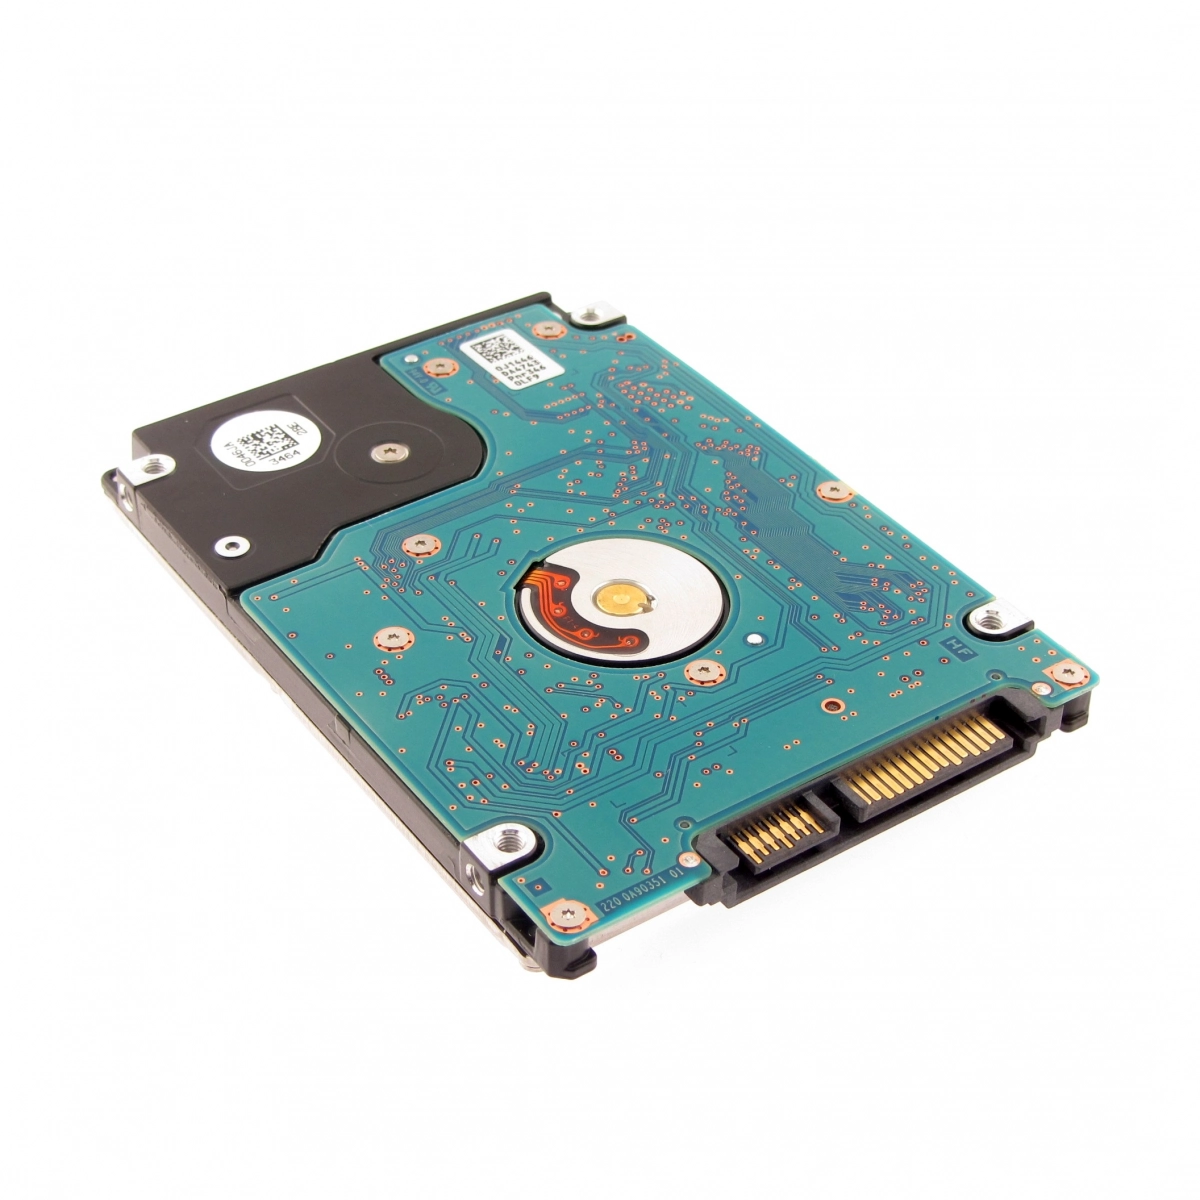 Notebook-Festplatte 1TB, 7mm, 7200rpm, 128MB für APPLE MacBook Pro 13 2.4GHz Dual Core i5 (10/2011)